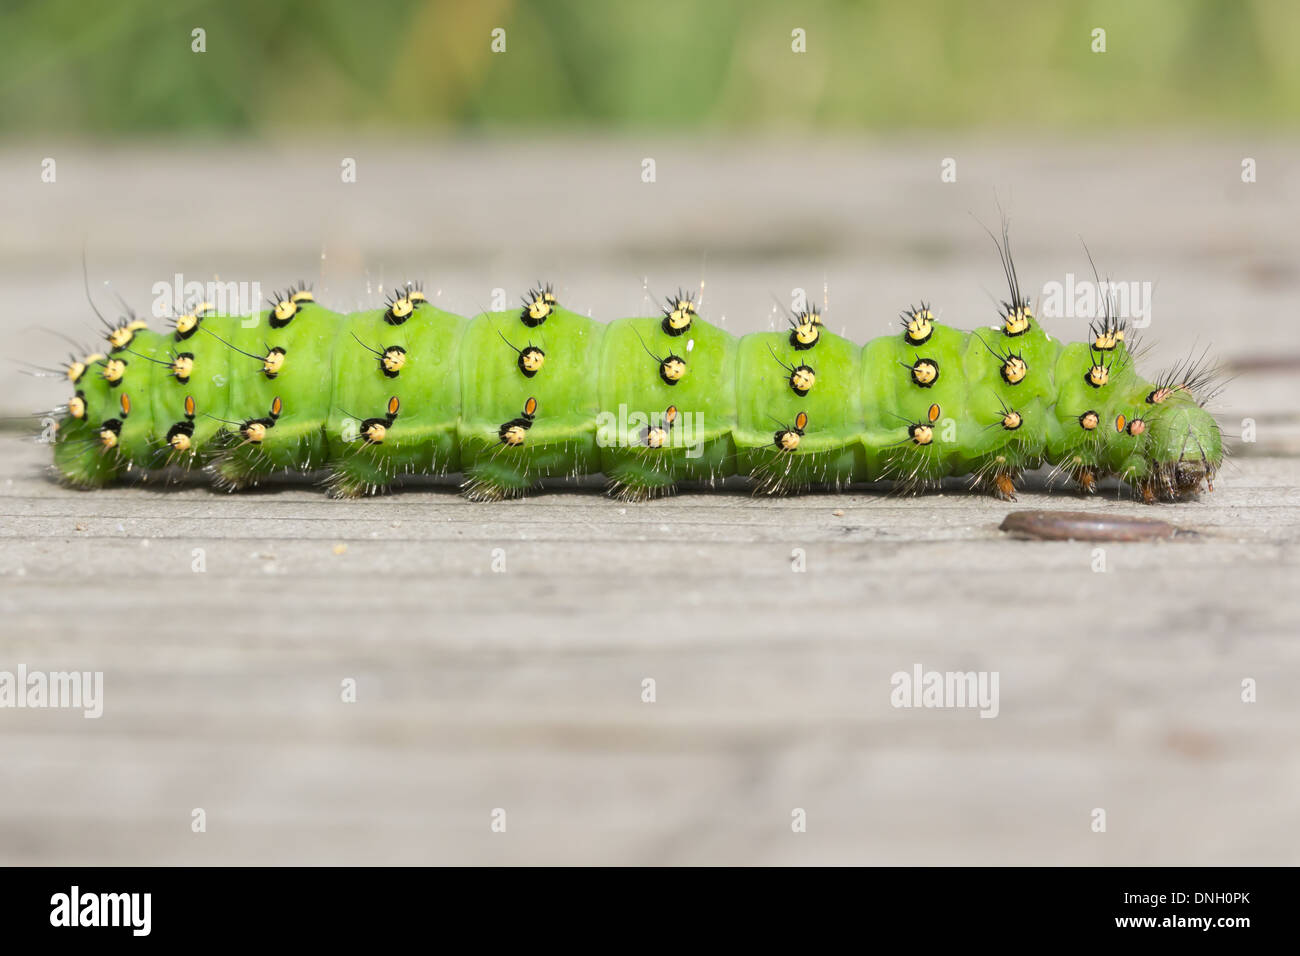 Emperor moth caterpillar (Saturnia pavonia) on boardwalk. Surrey, UK. Stock Photo